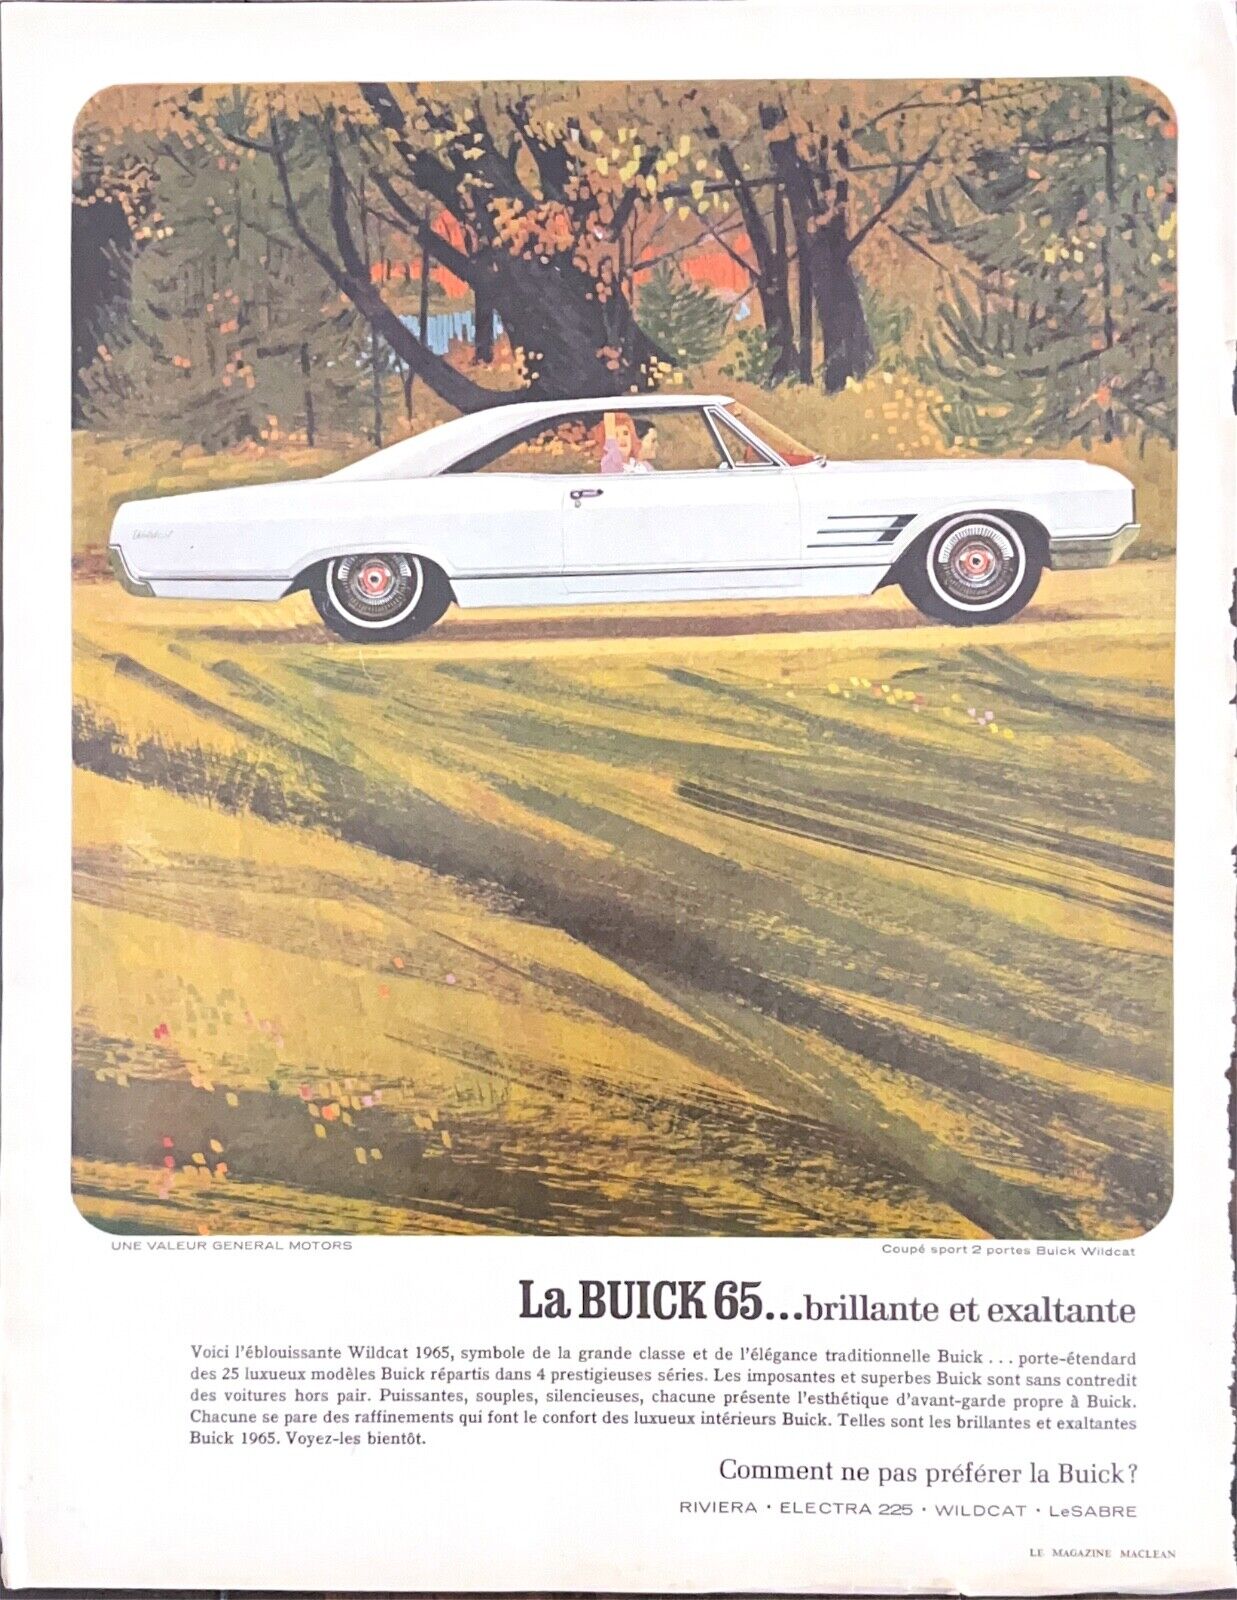 1965 Buick Wildcat, sedan, white, 2 doors, written in French